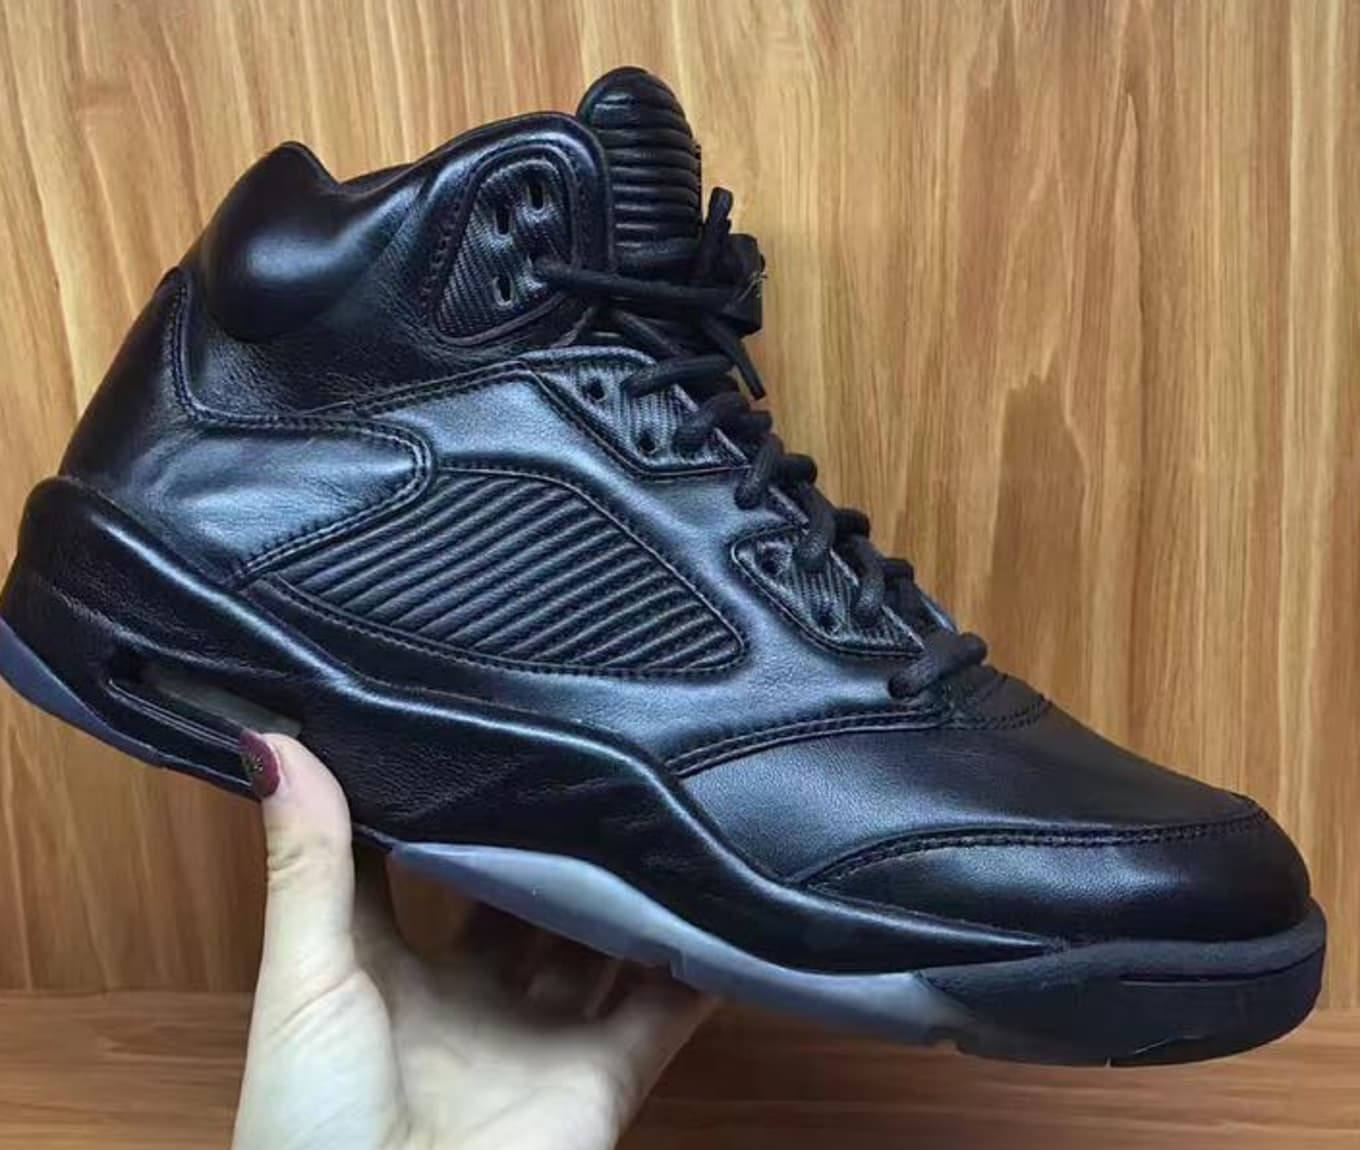 jordan 5 black leather online -